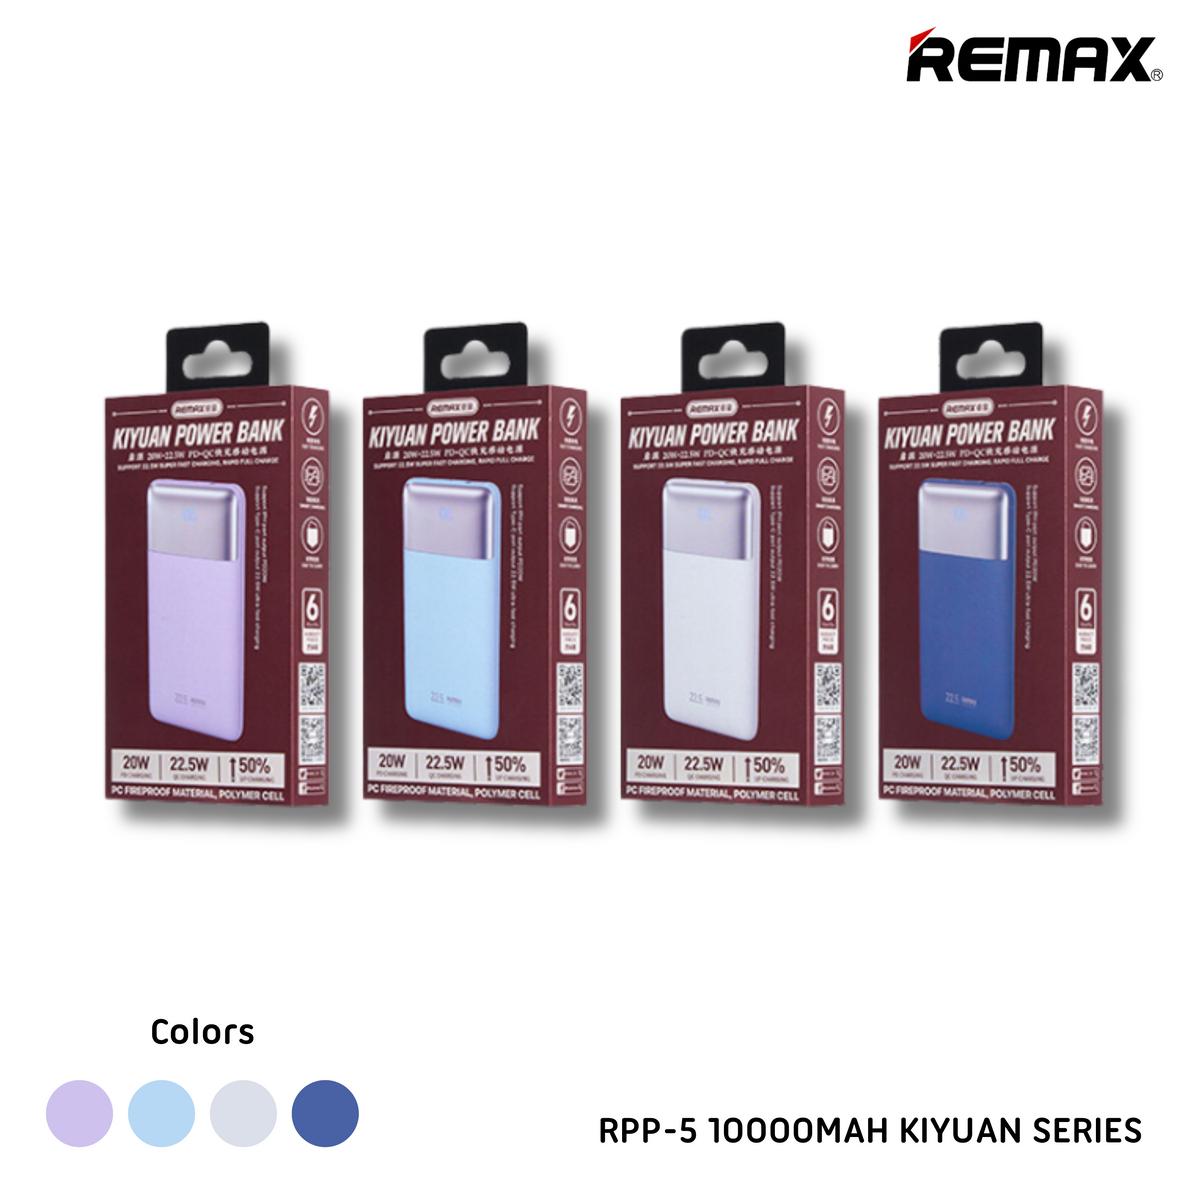 REMAX RPP-5 10000MAH KIYUAN 20W+22.5W PD+QC FAST CHARGING POWER BANK